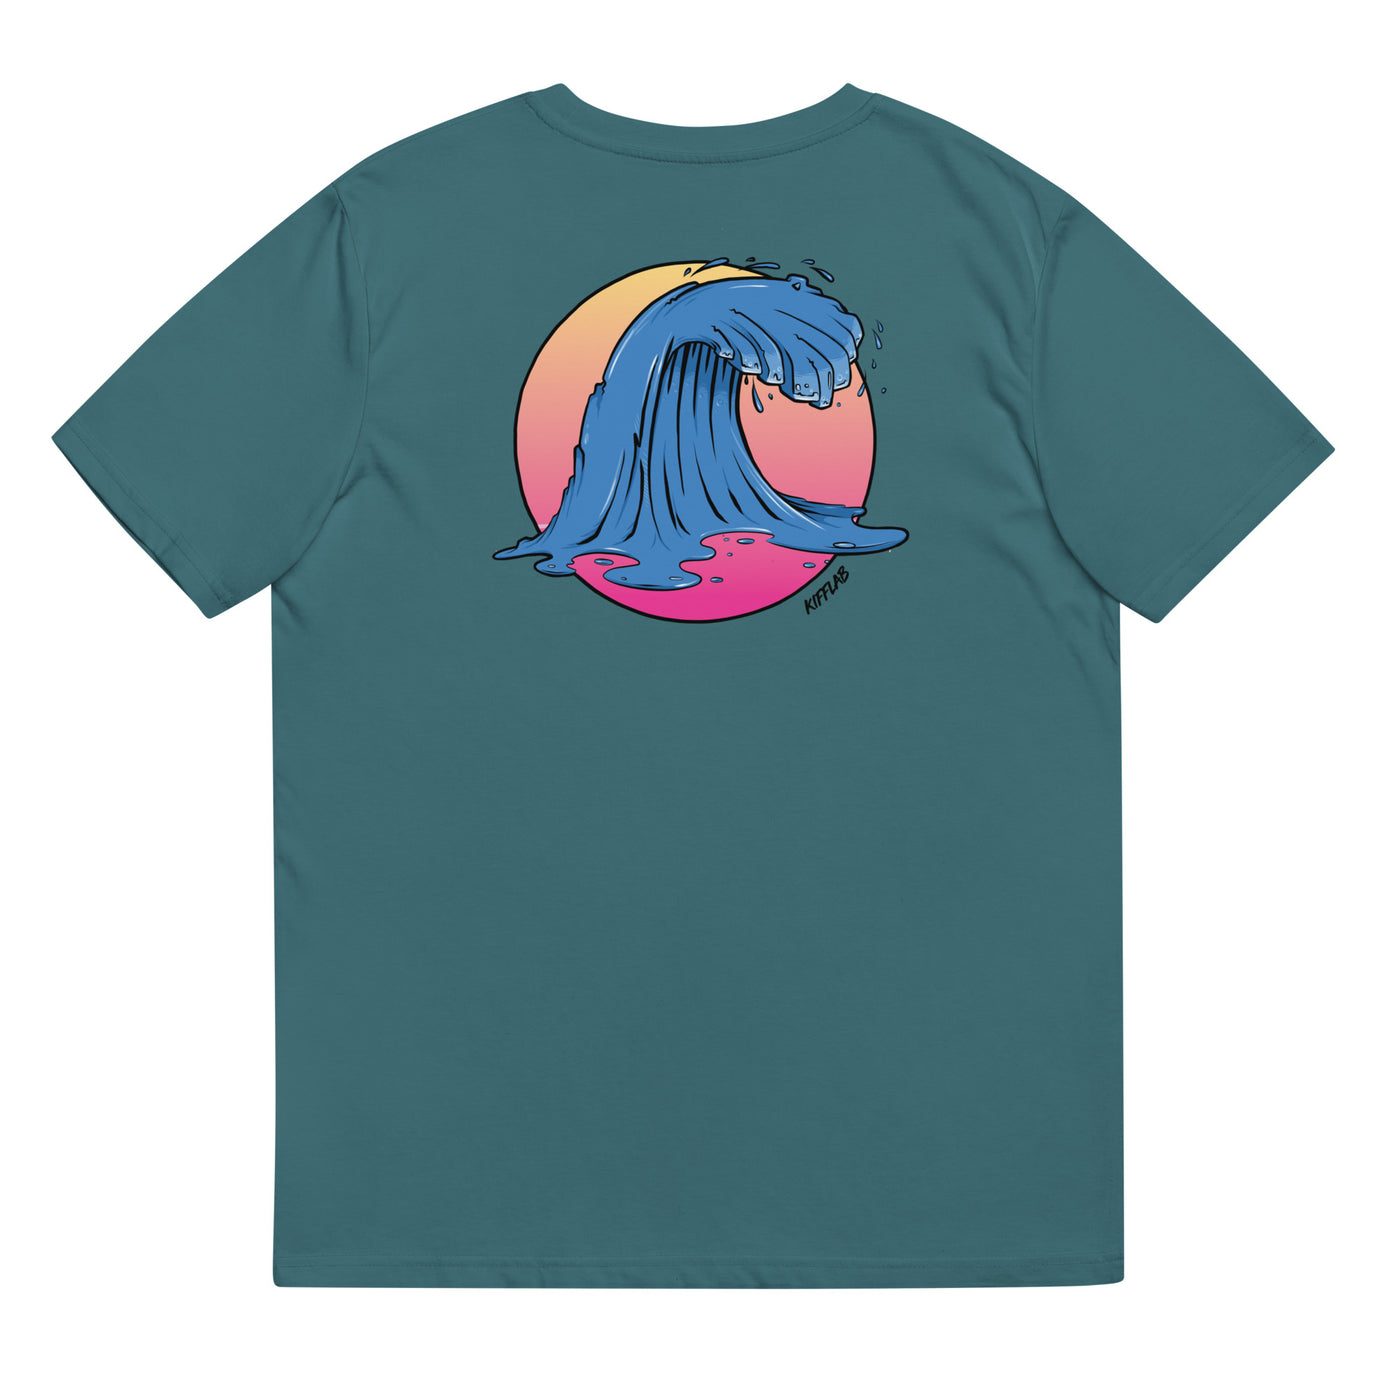 KiffLab Wave Eco-friendly T shirt